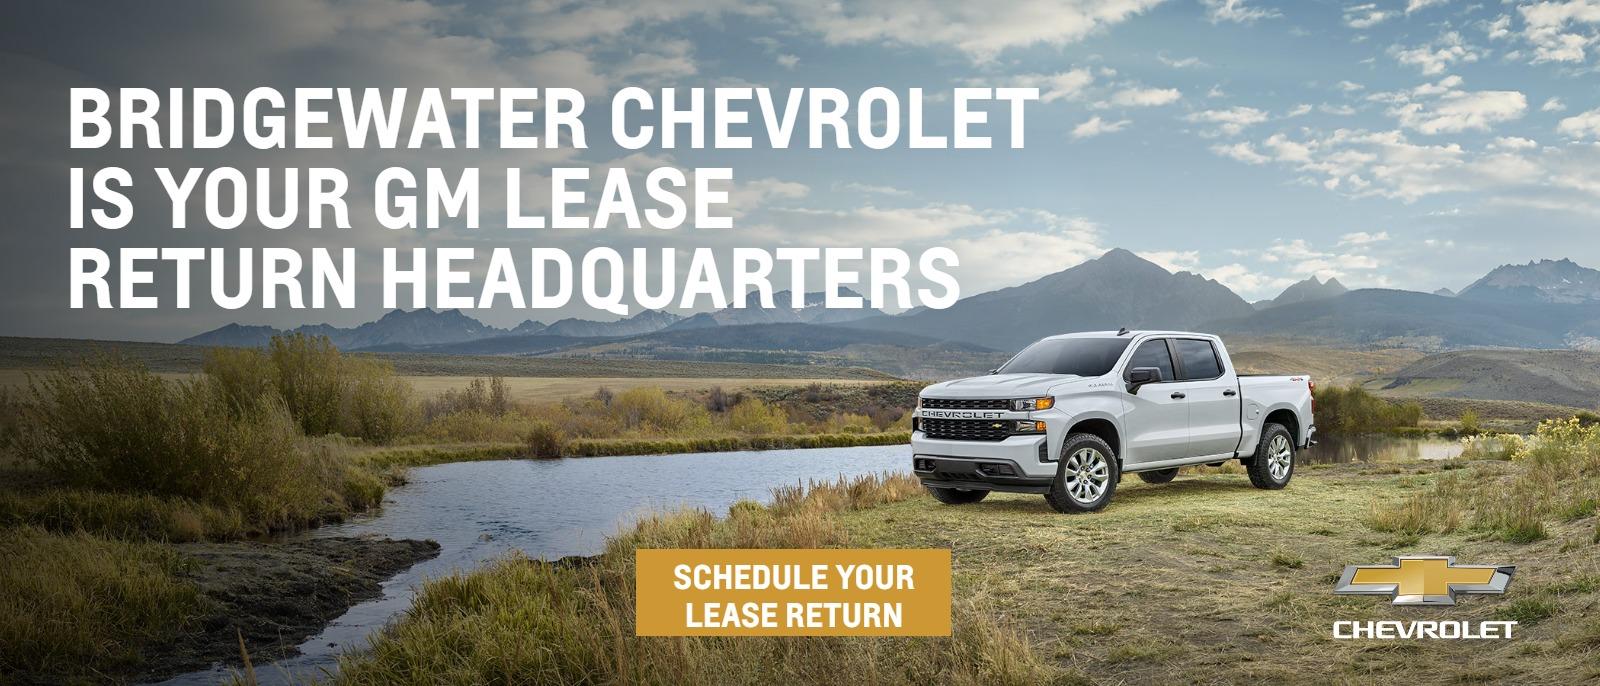 Bridgewater Chevrolet Is Your GM Lease Return Headquarters